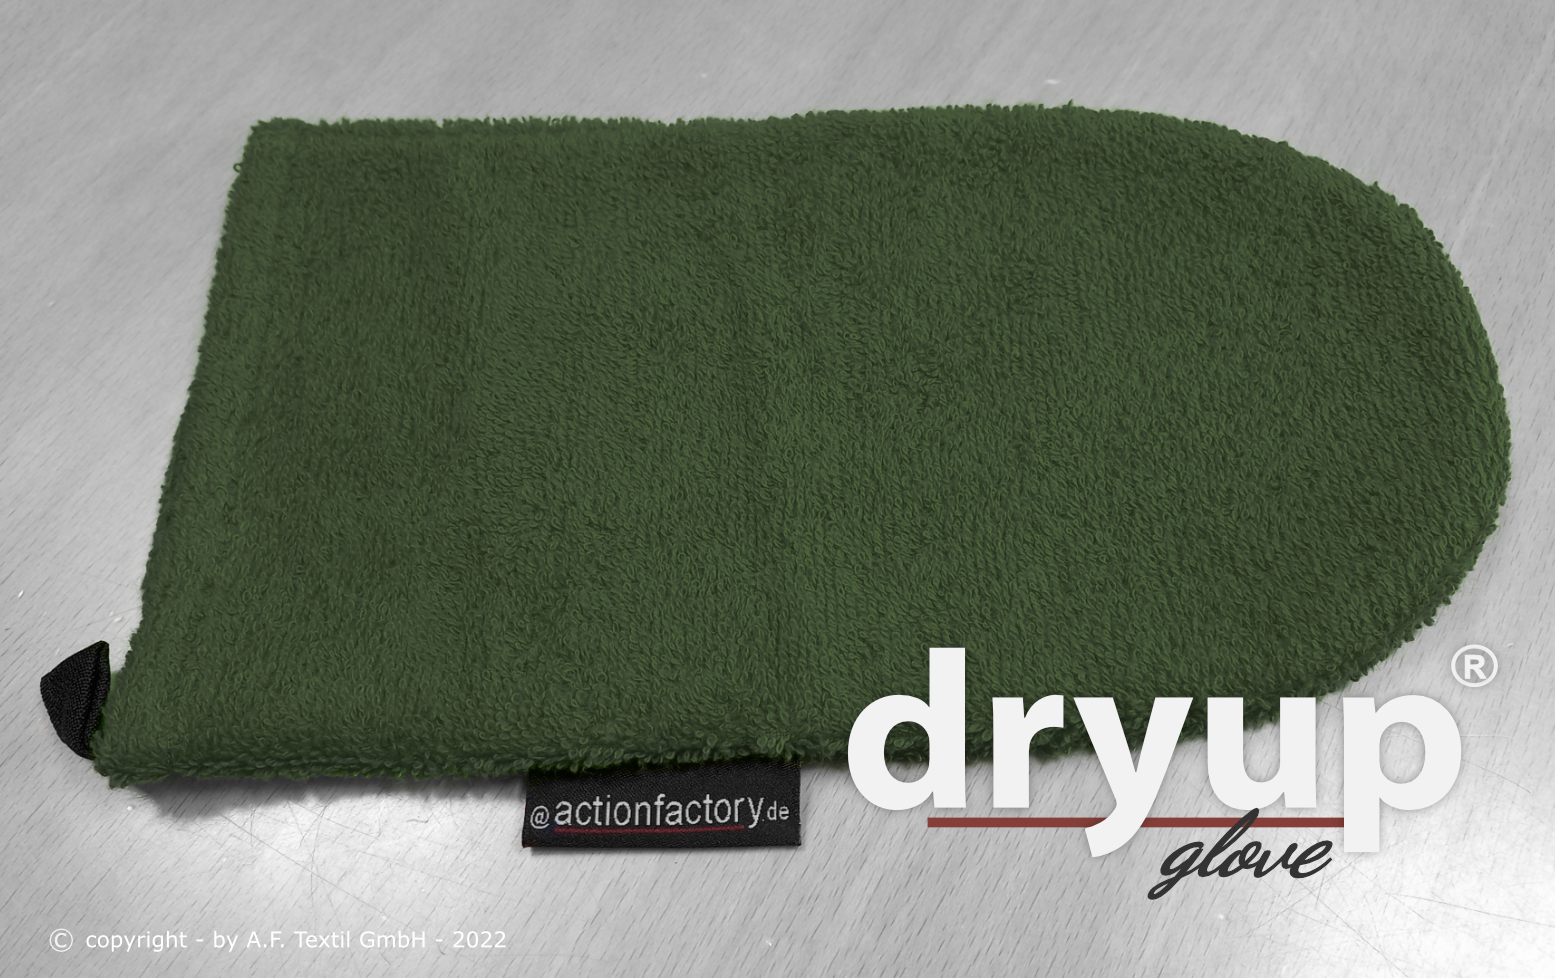 Dryup® glove dark green